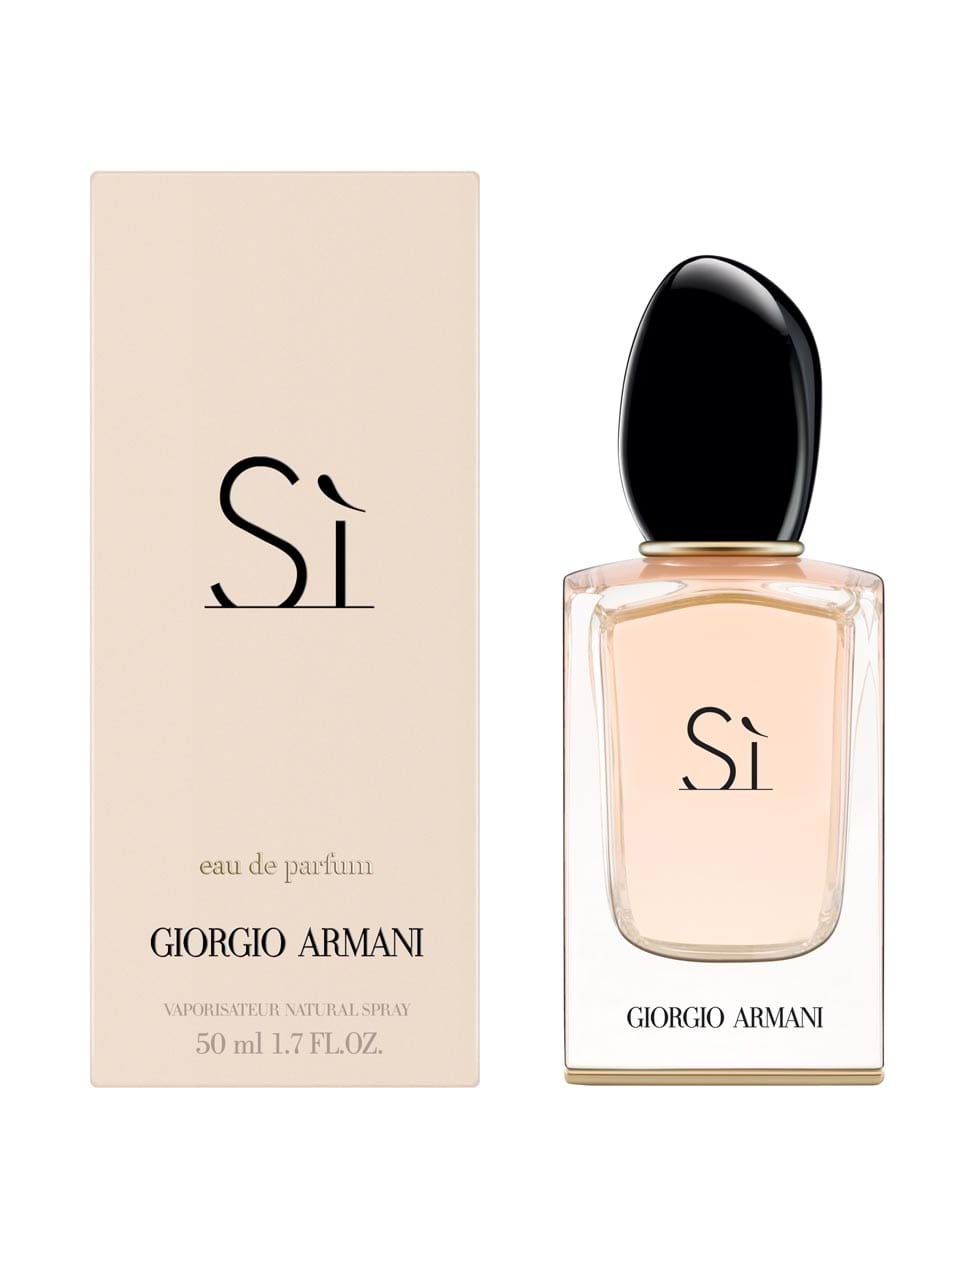 giorgio armani si eau de parfum 50ml